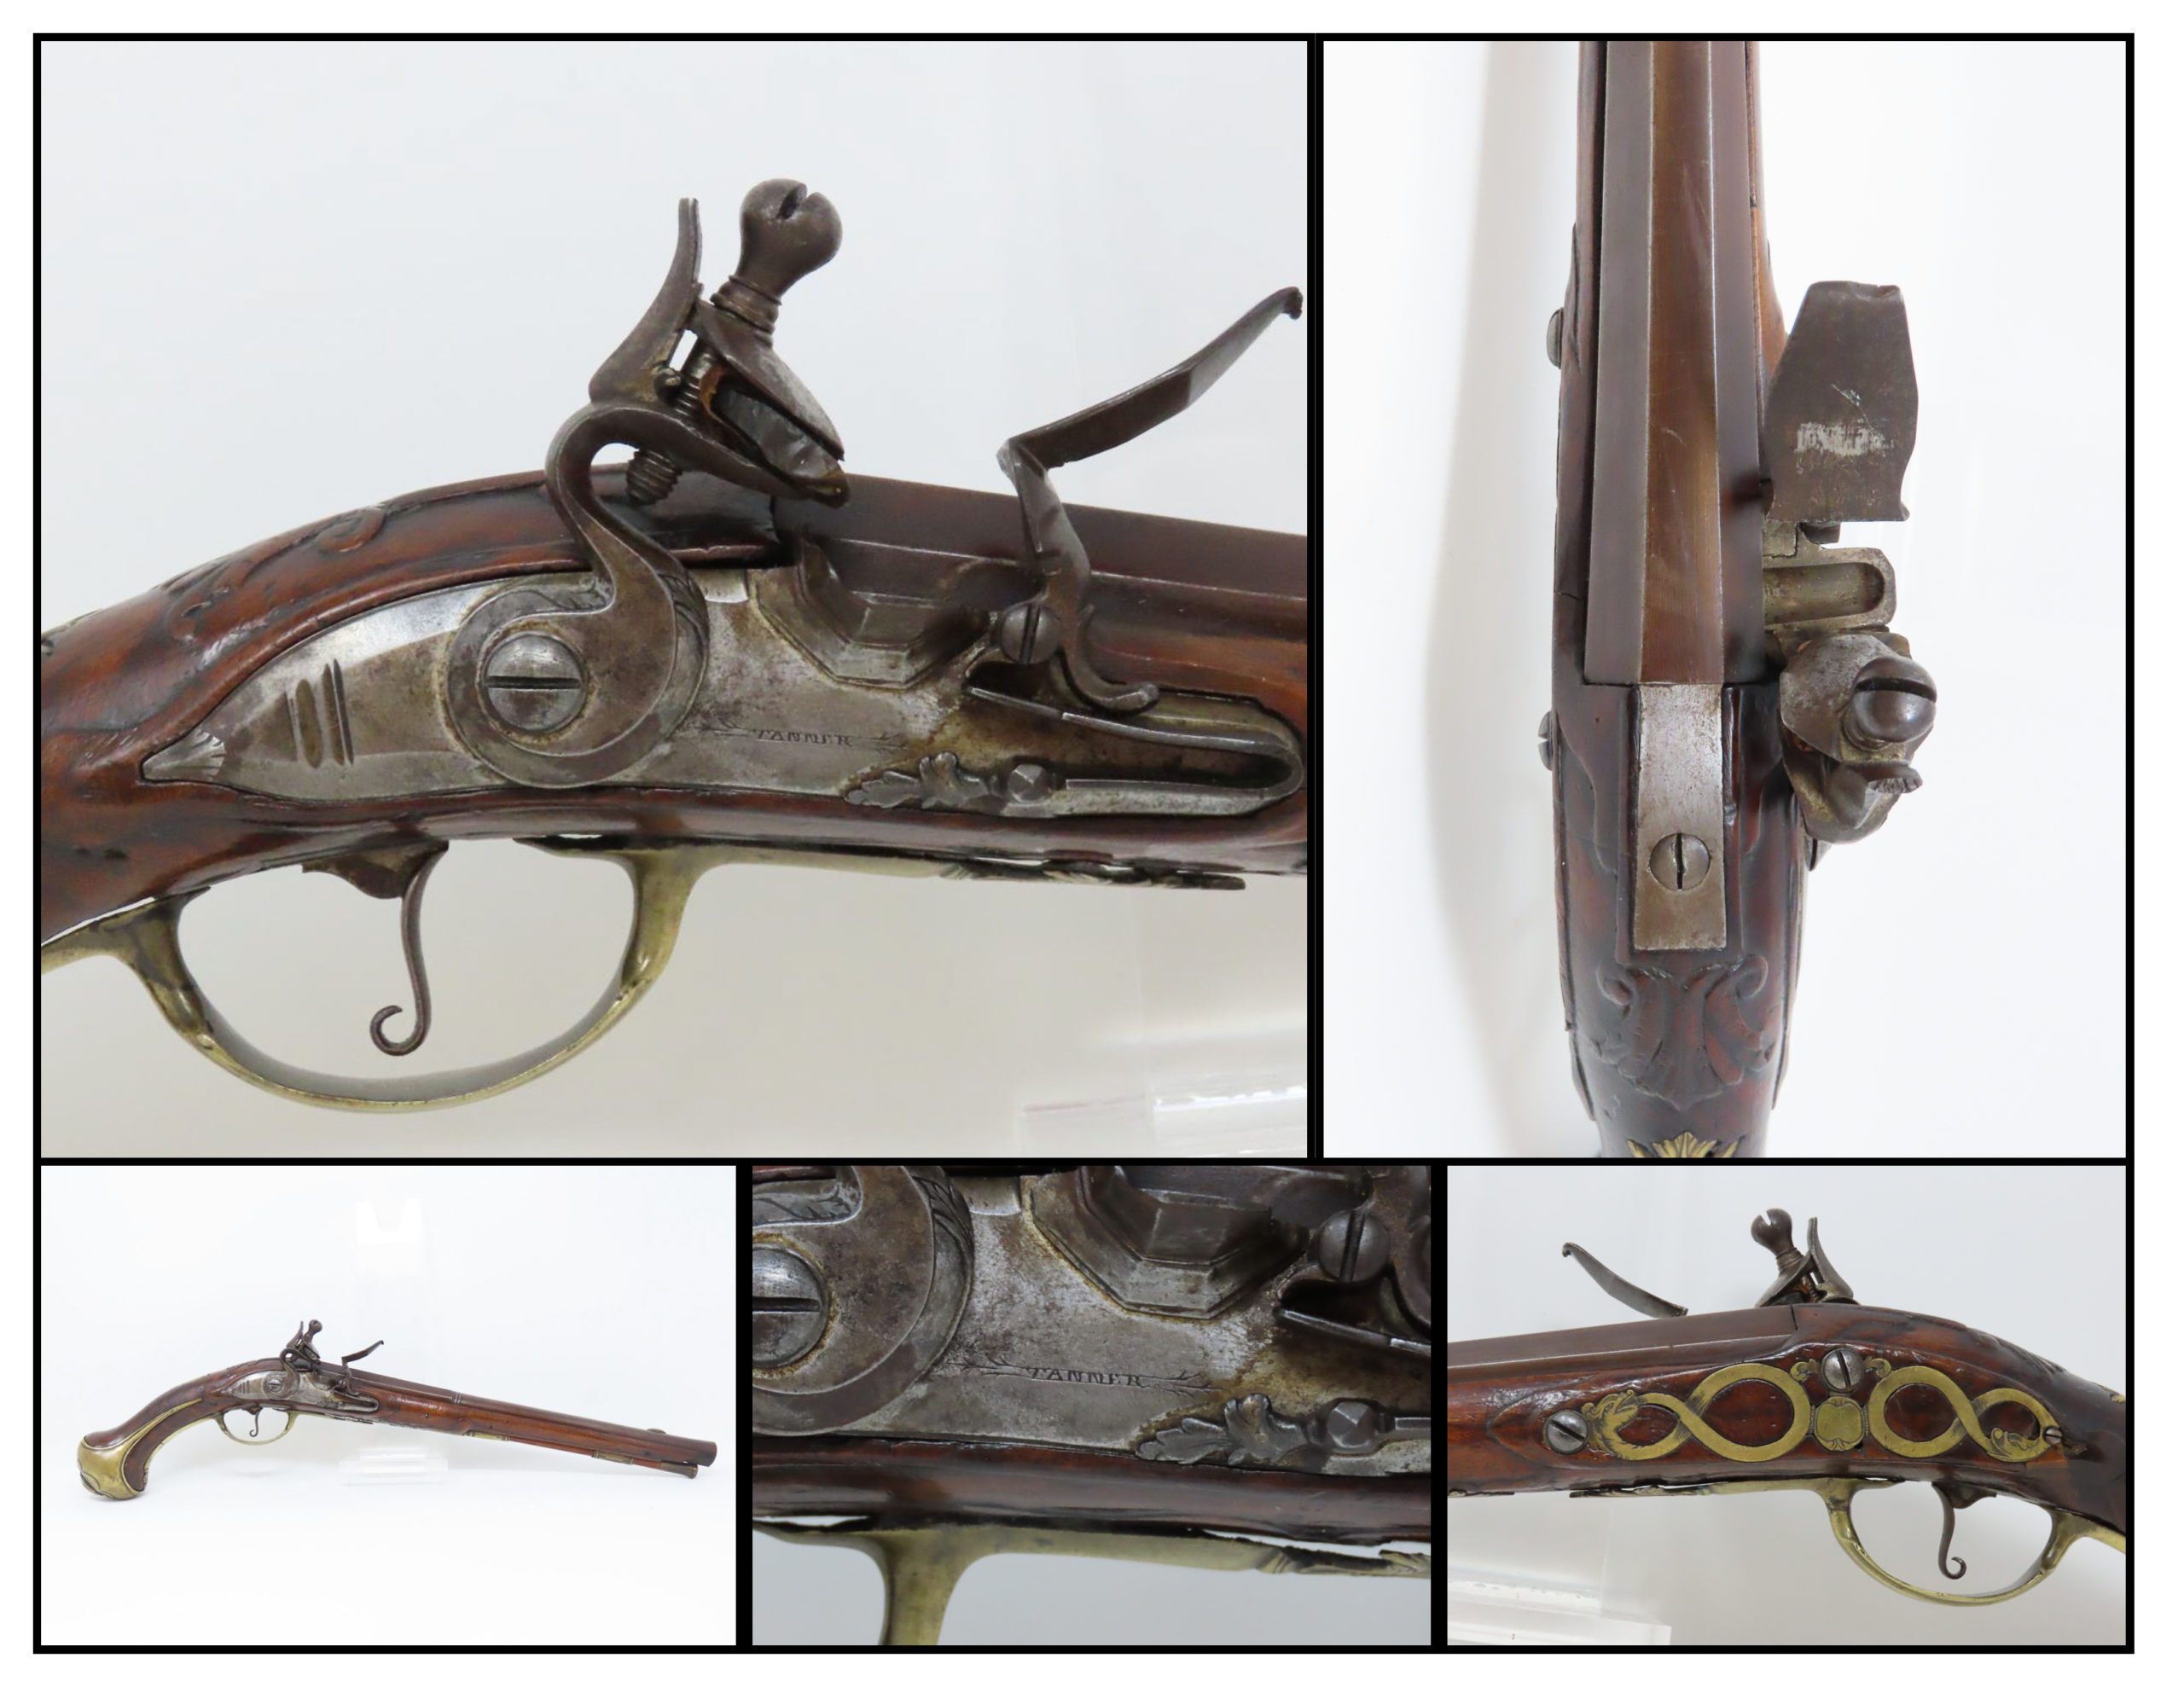 German Flintlock Blunderbuss Pistol, 1700's - Irongate Armory